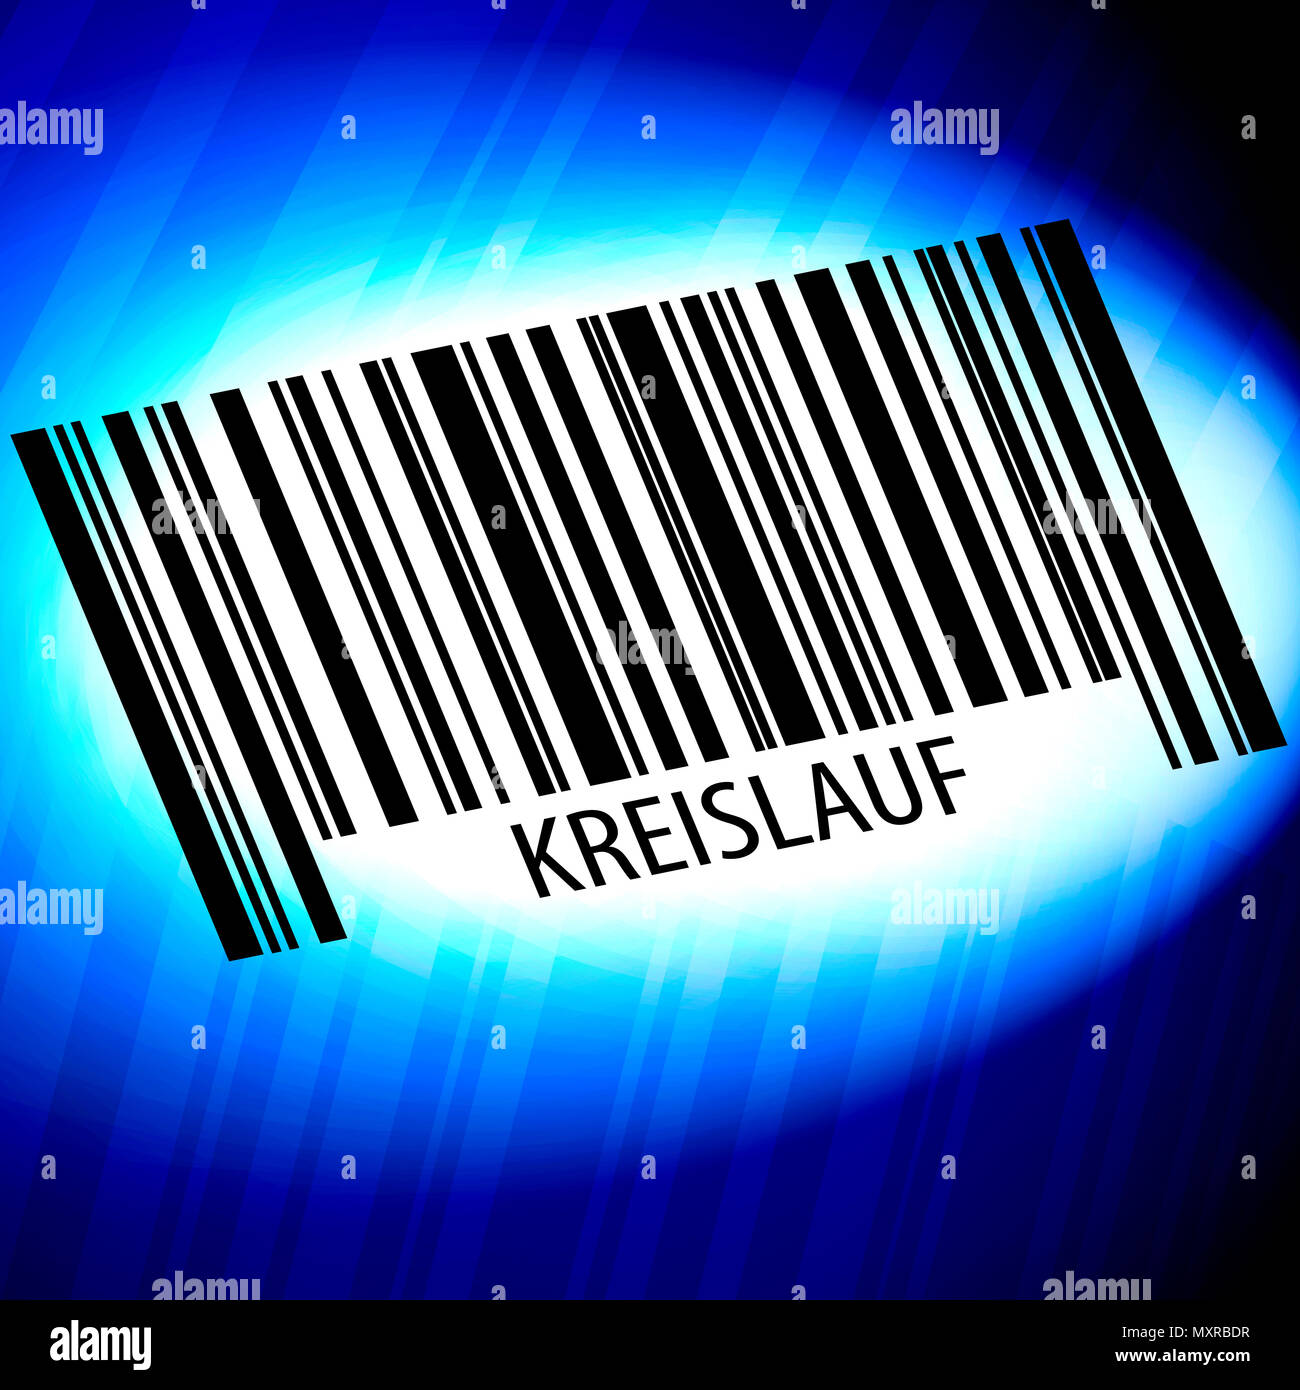 Kreislauf - barcode with blue Background Stock Photo